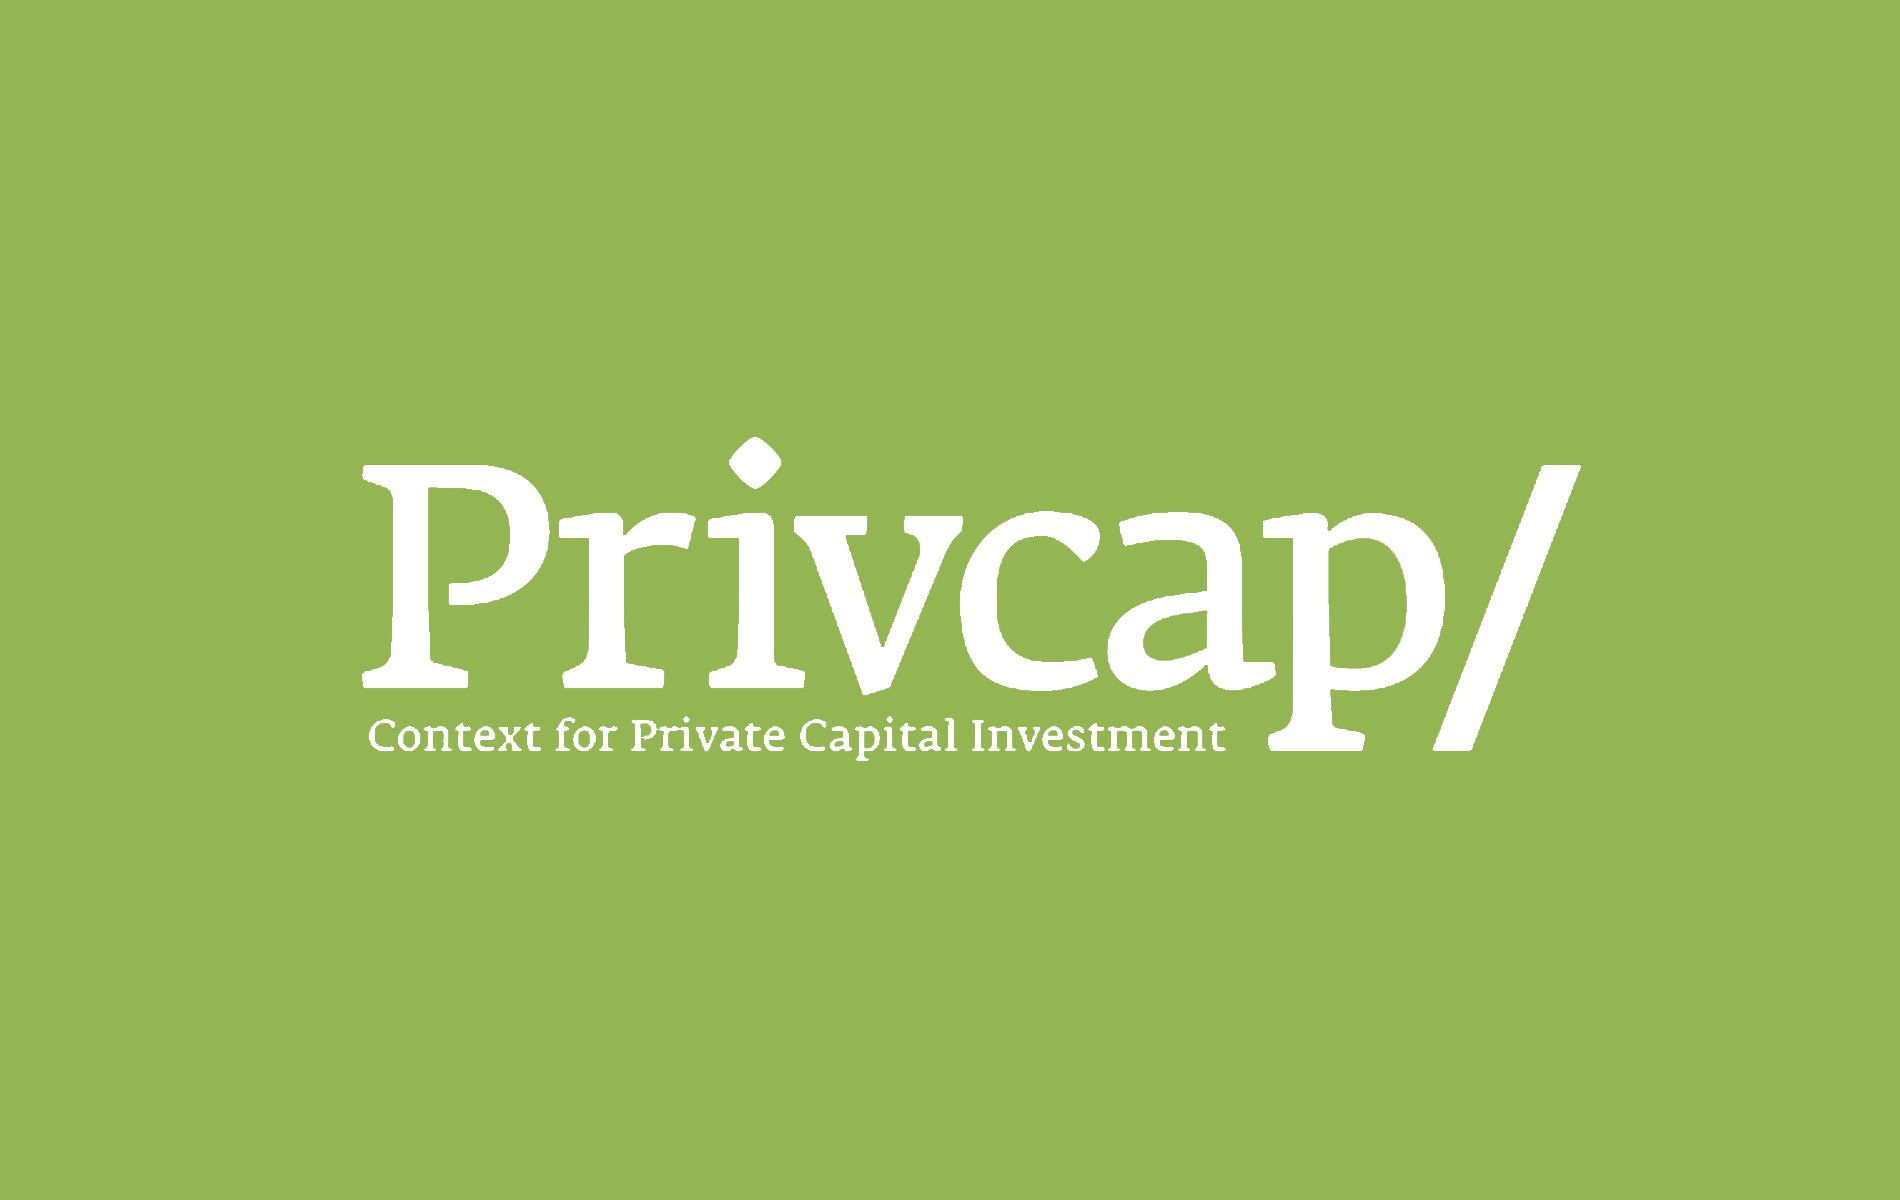 Privcap logo